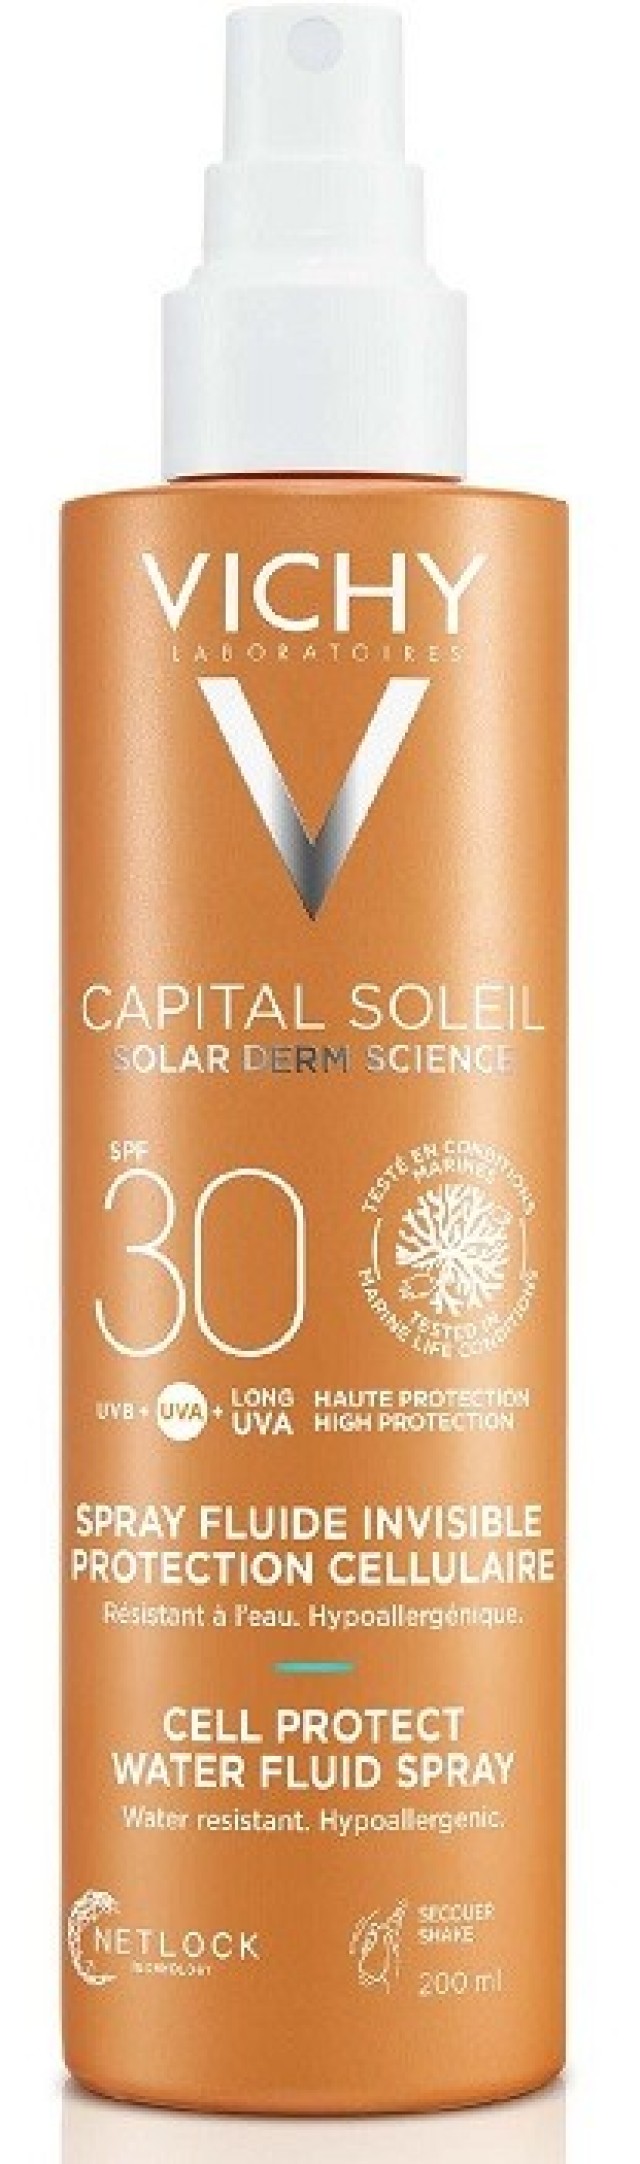 Vichy Capital Soleil Cell Protect Water Fluid Spray spf30 Αντηλιακό Spray Πολλαπλής Χρήσης 200ml